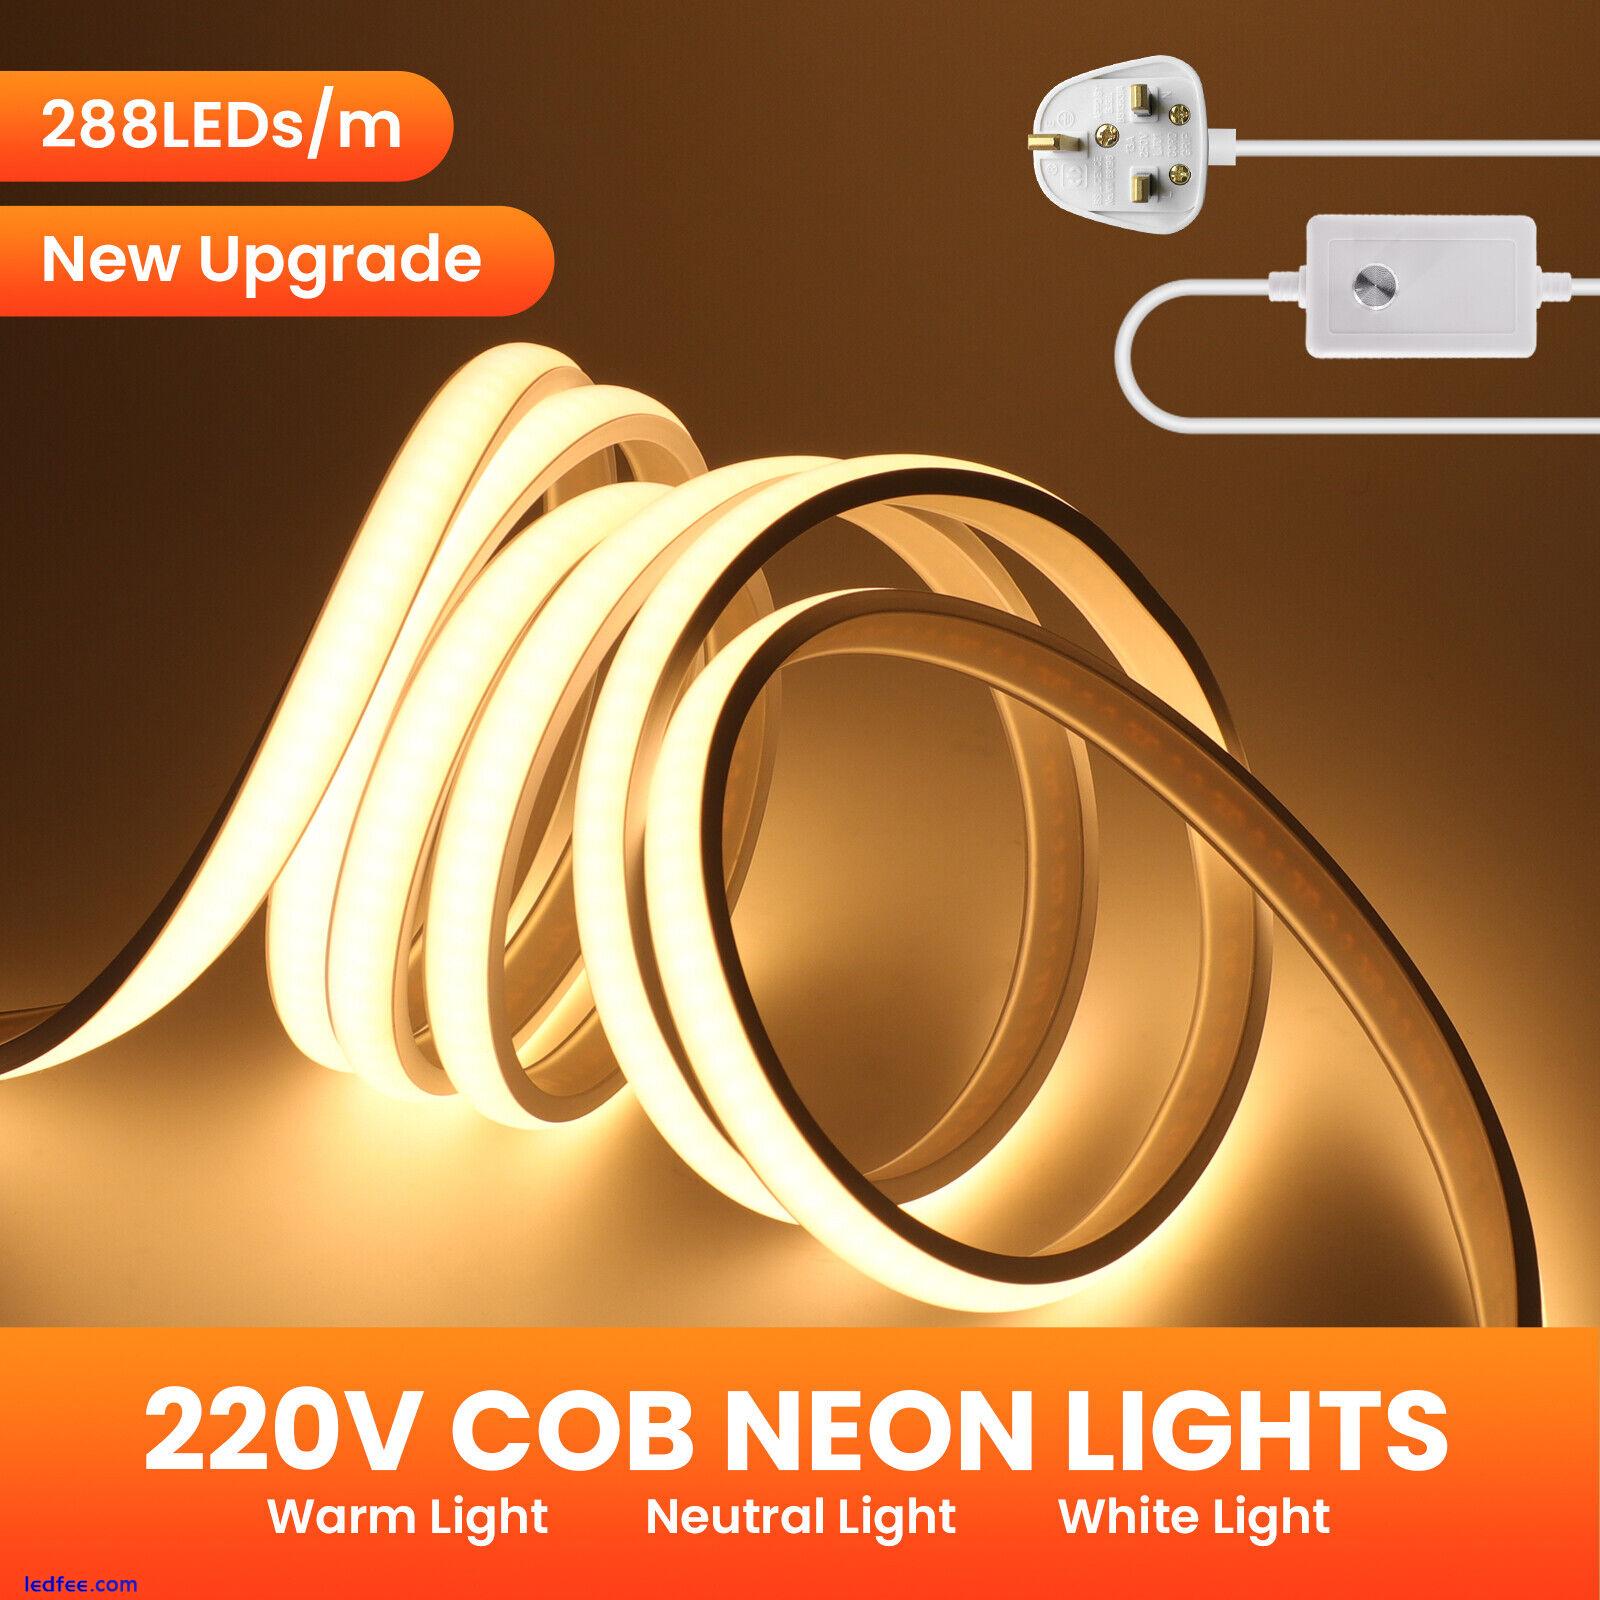 220V COB LED Neon Strip Lights Dimmable Waterproof Rope Outdoor Lighting UK Plug 1 